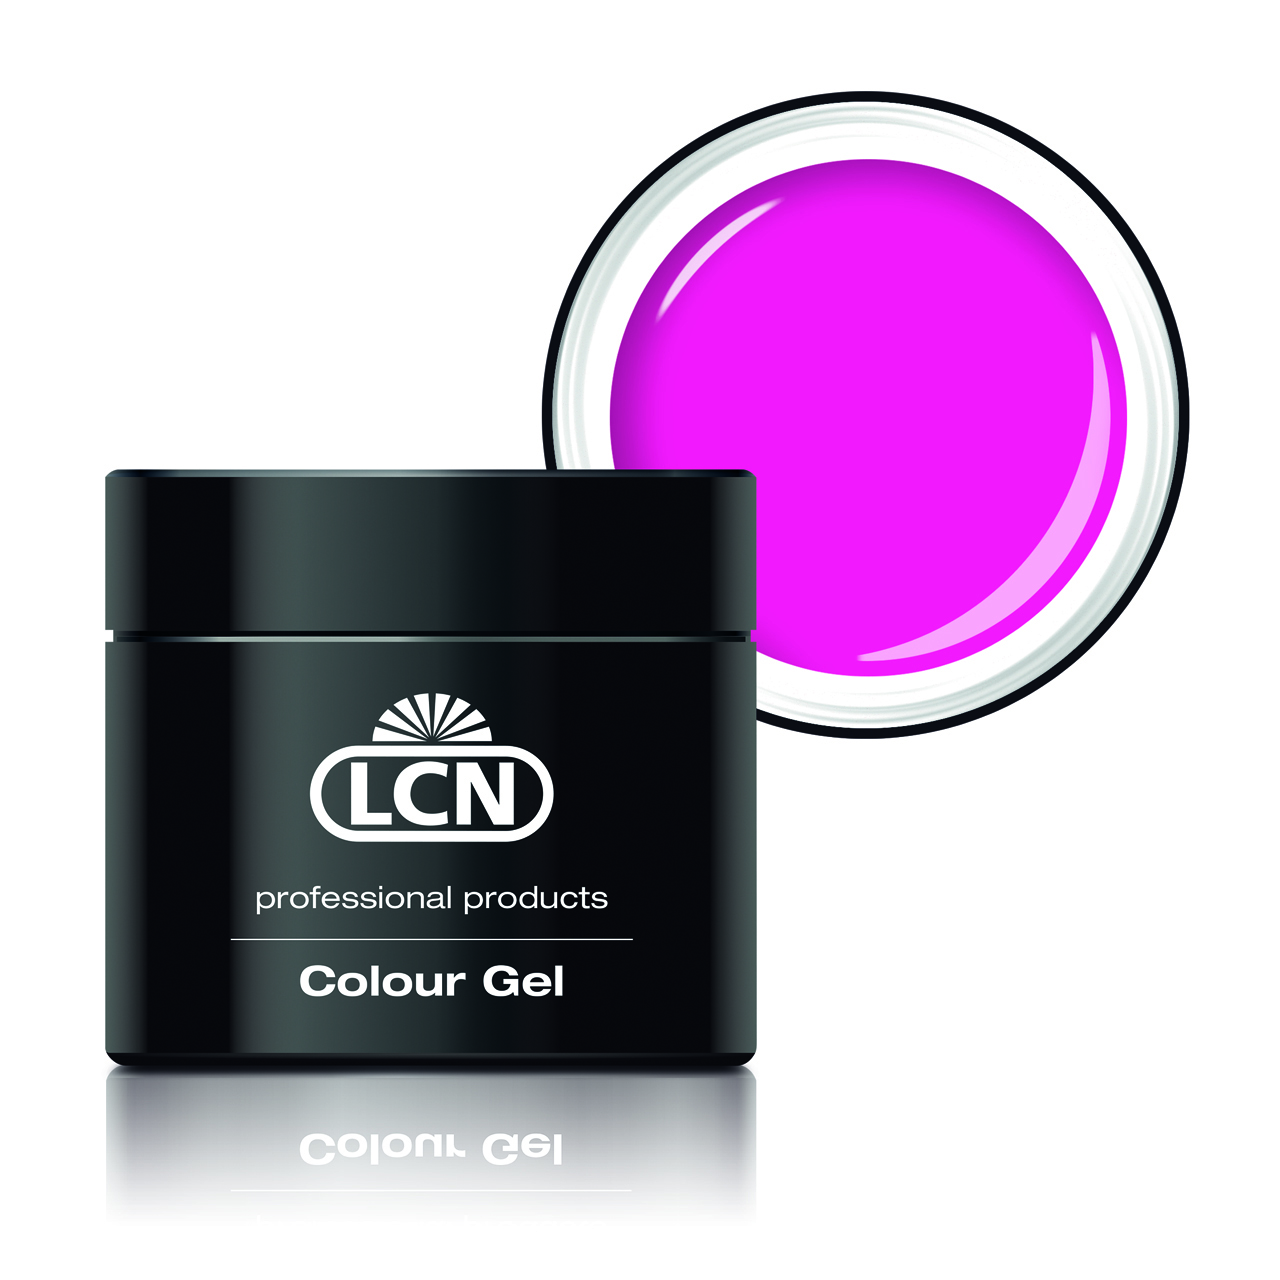 Colour gels bora bora dreams gel u boji 5ml20605 803.jpg